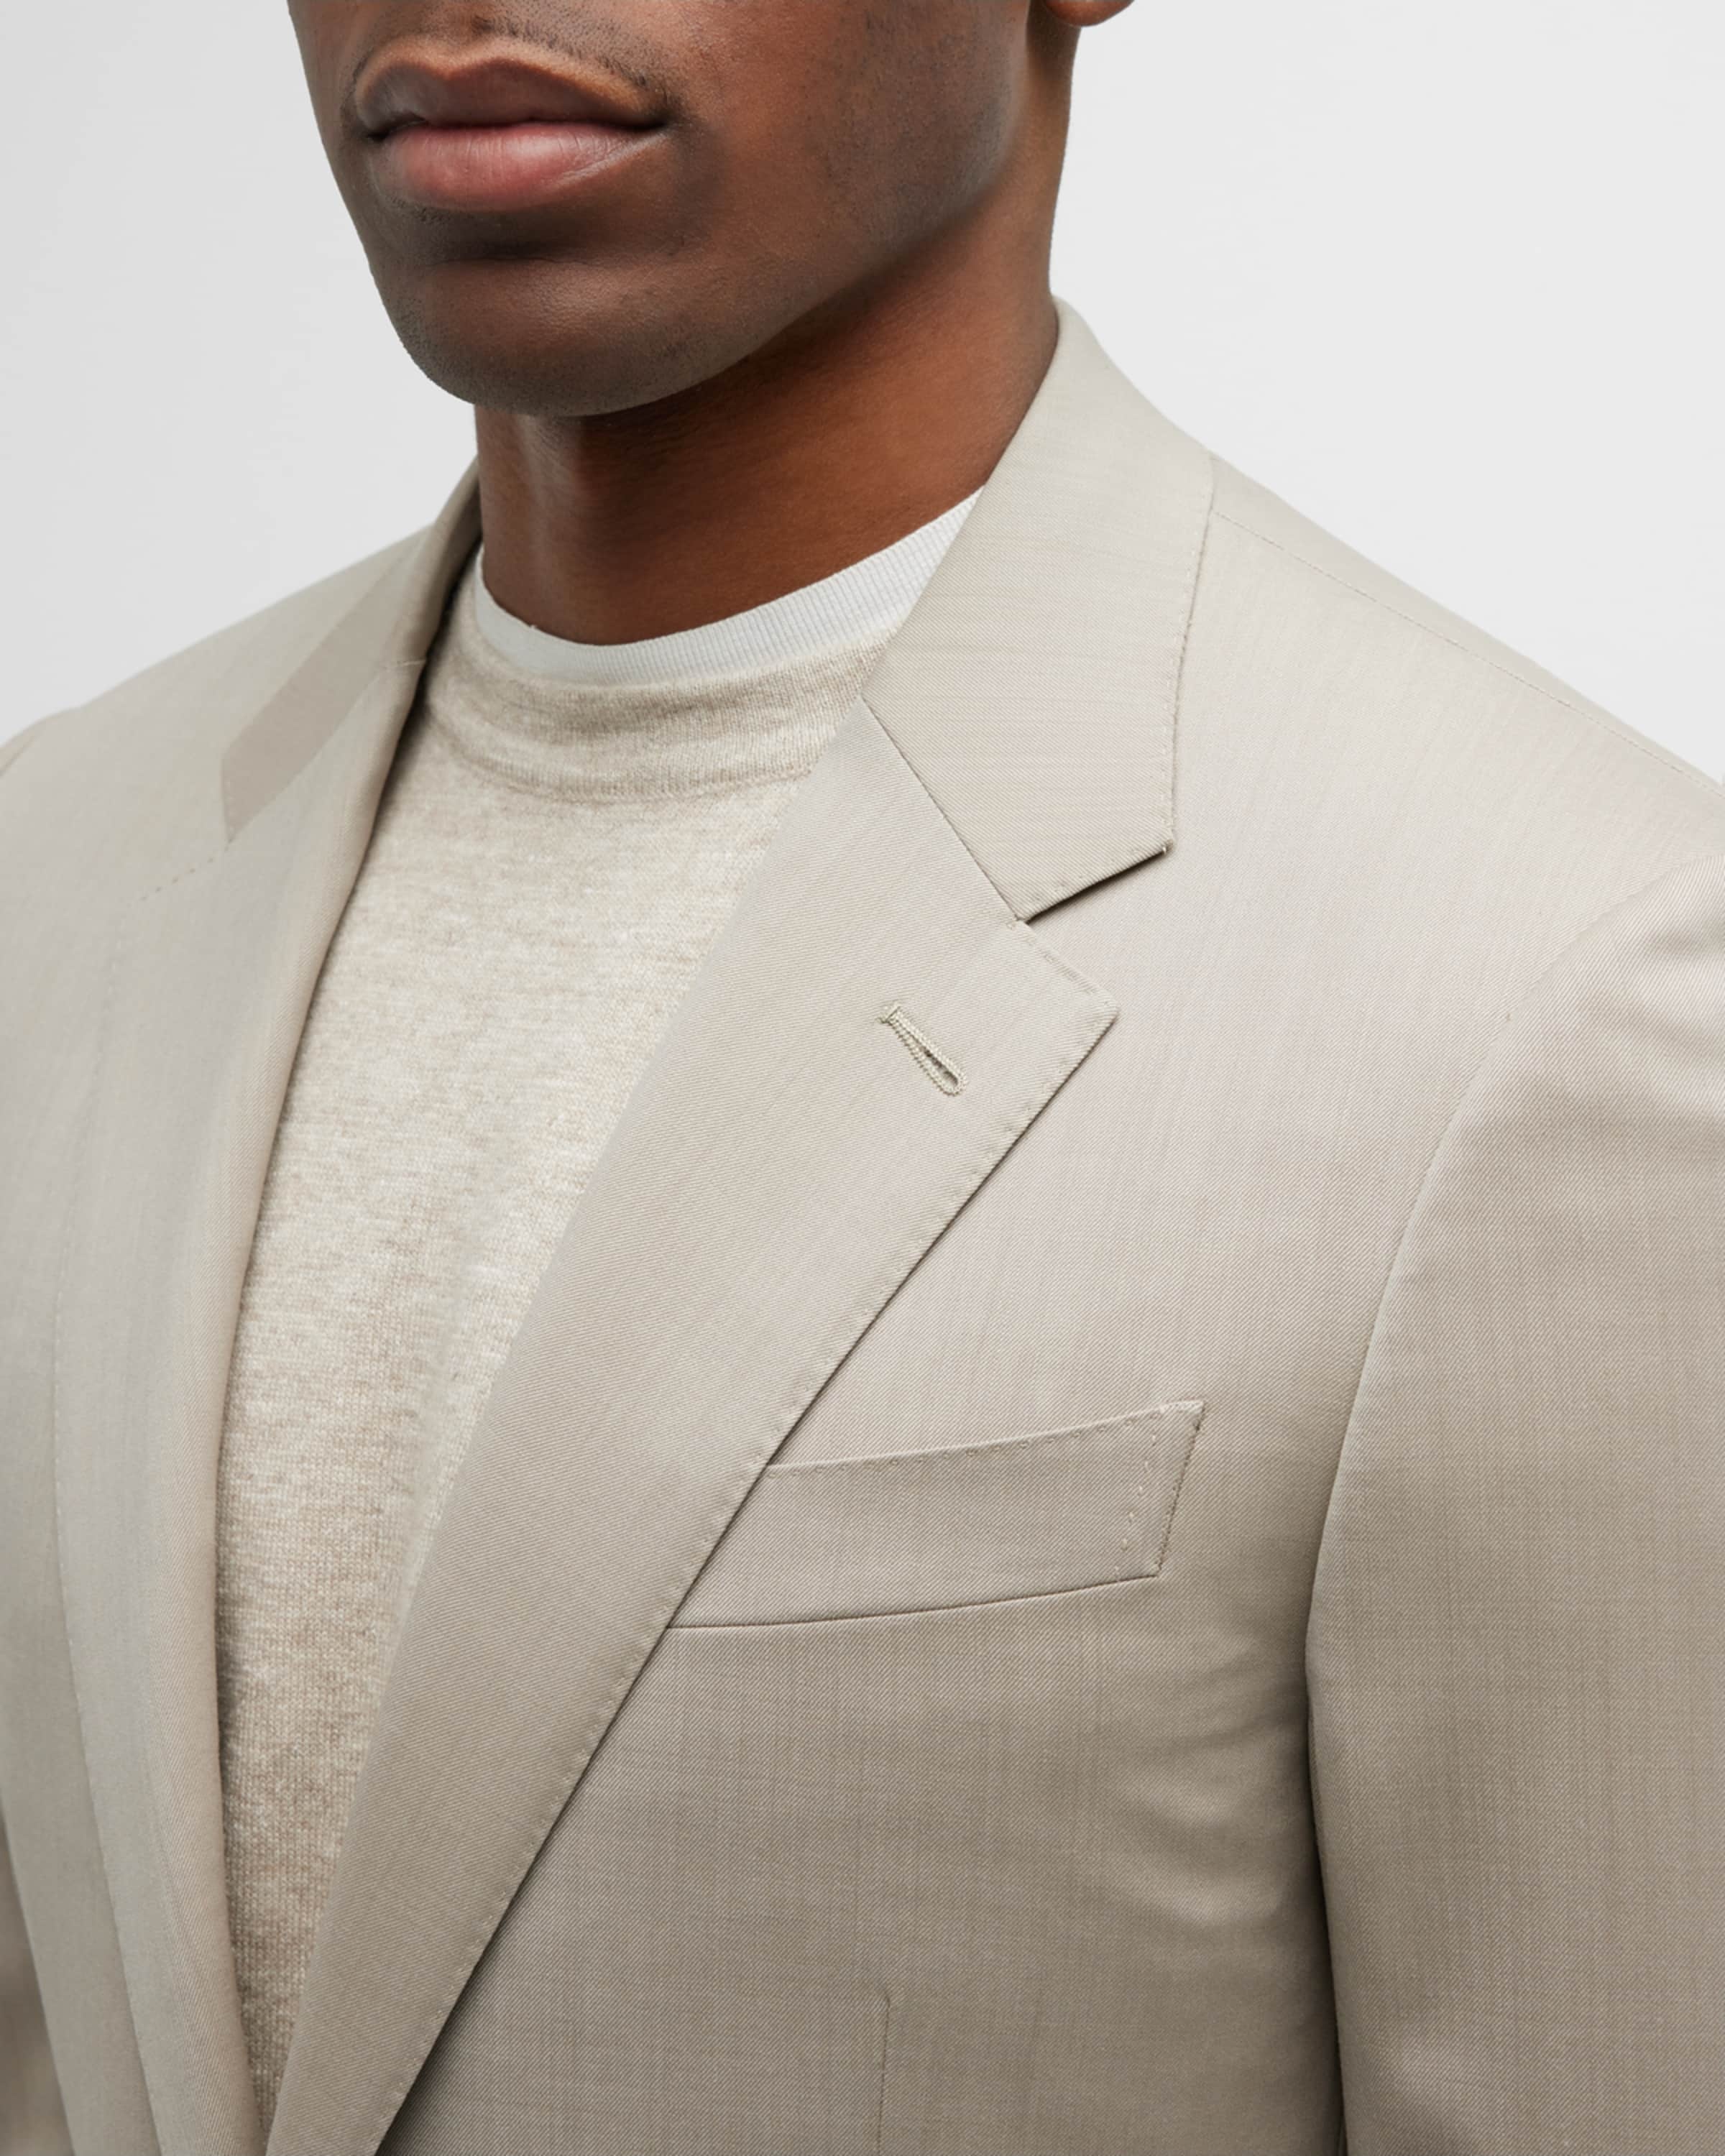 Men's Solid Wool Twill Suit - 3